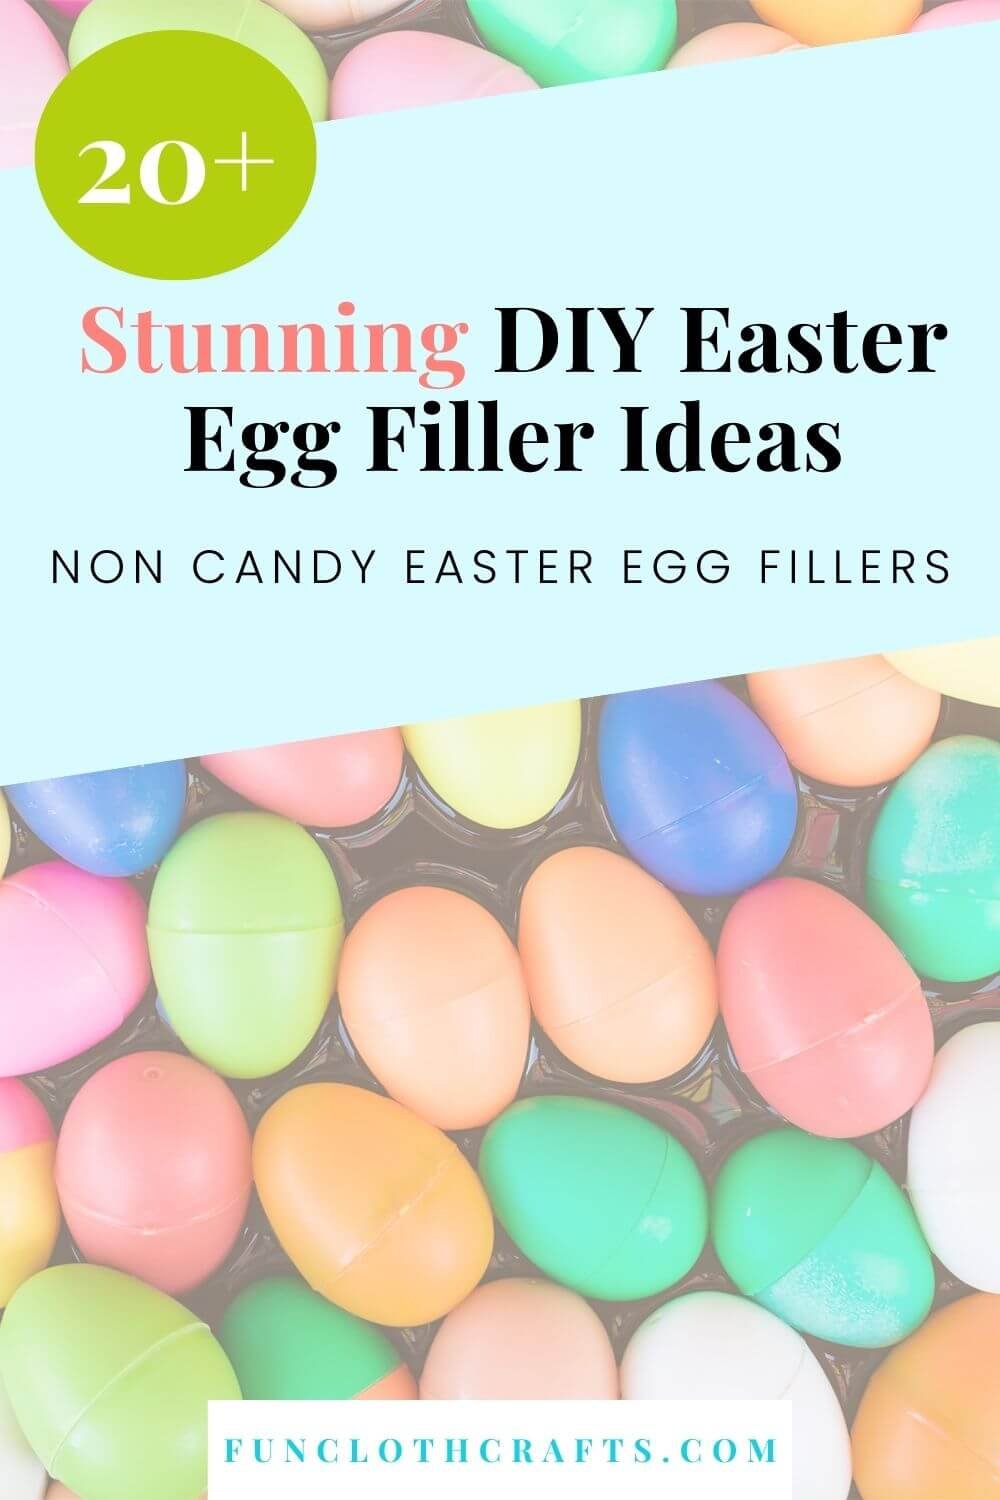 DIY Easter Egg Filler Ideas - Non-Candy Egg Fillers